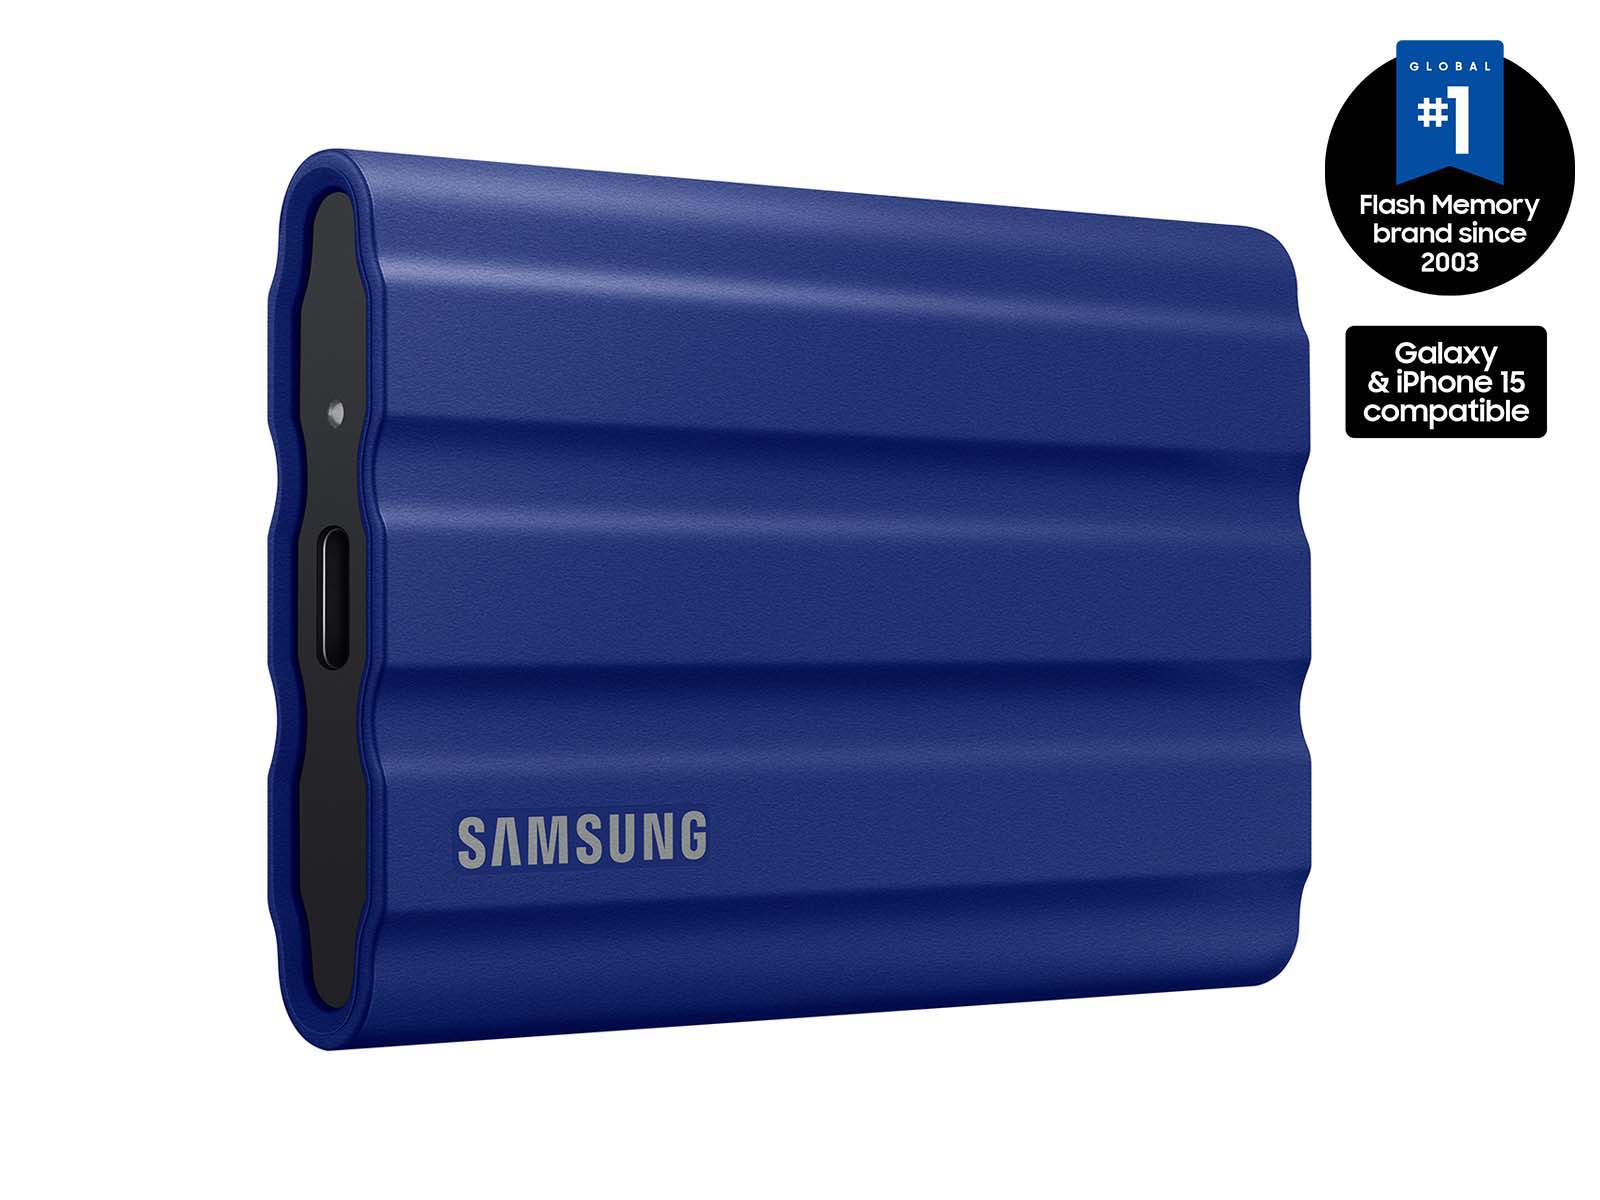 Thumbnail image of Portable SSD T7 Shield USB 3.2 1TB (Blue)